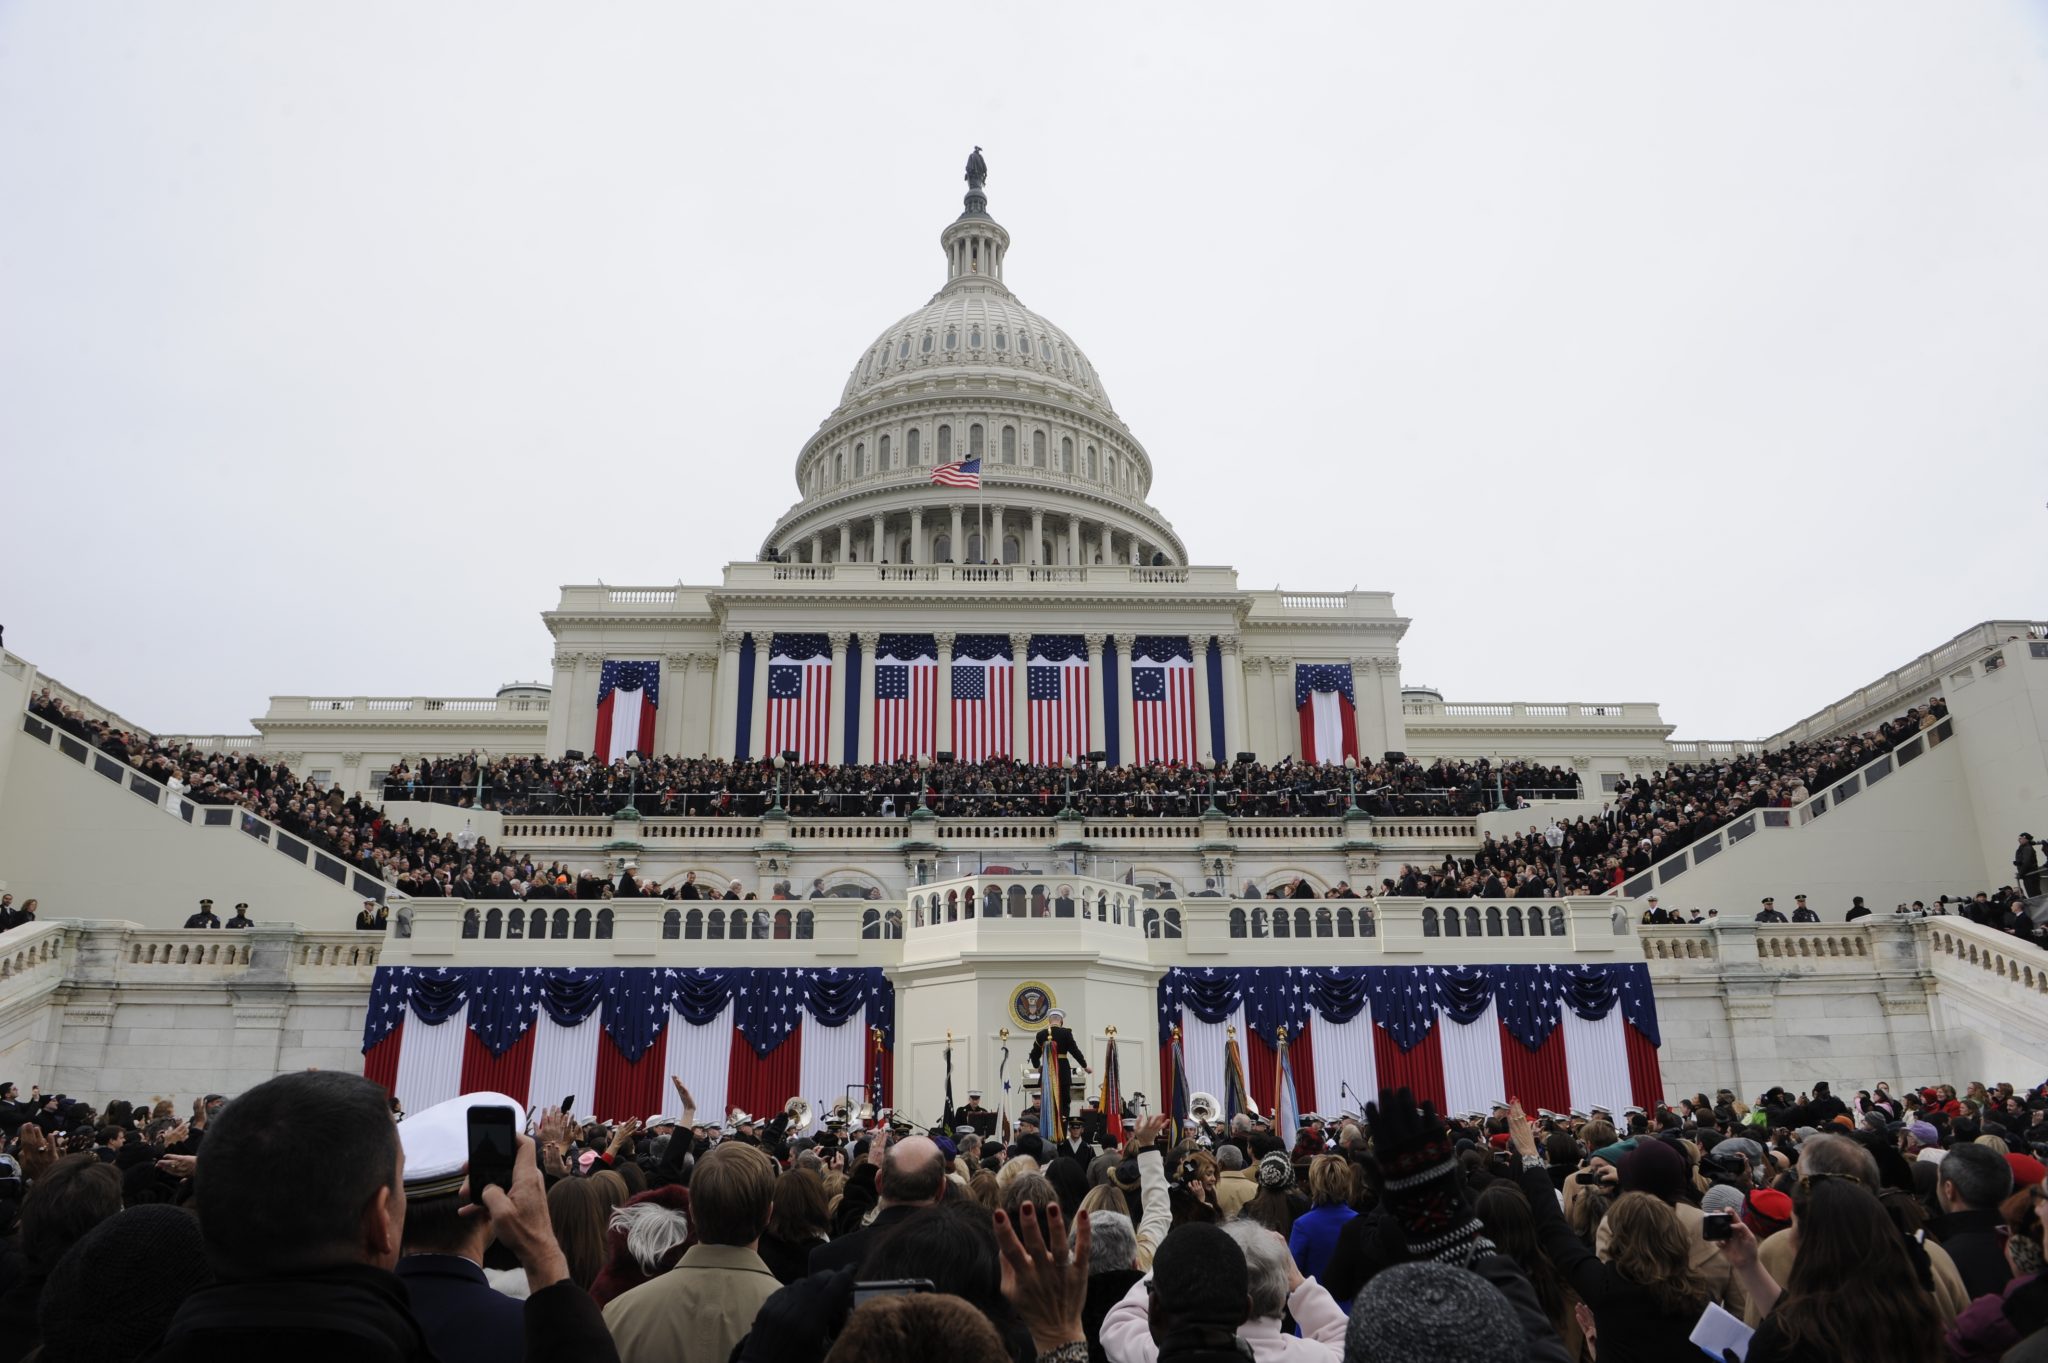 Presidential Inaugural Parade [Image 11 of 11]